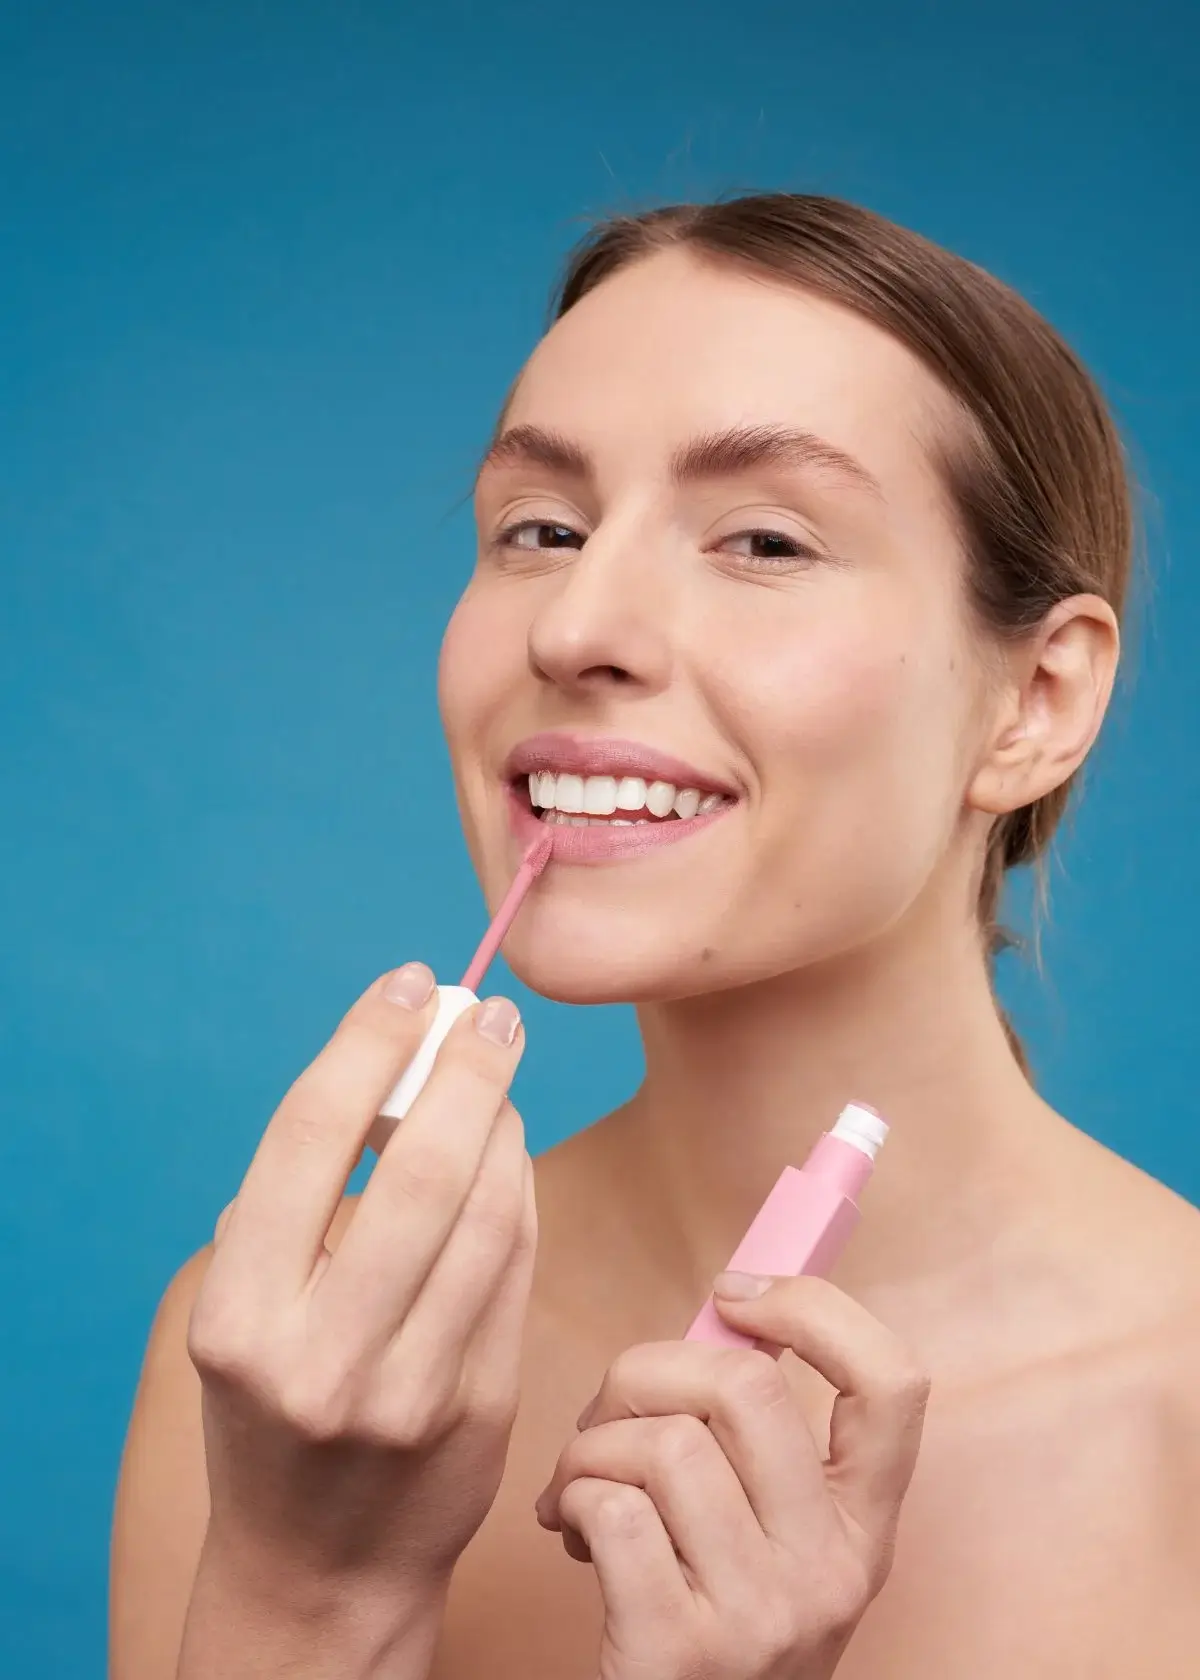 What ingredients make a lipstick moisturizing?